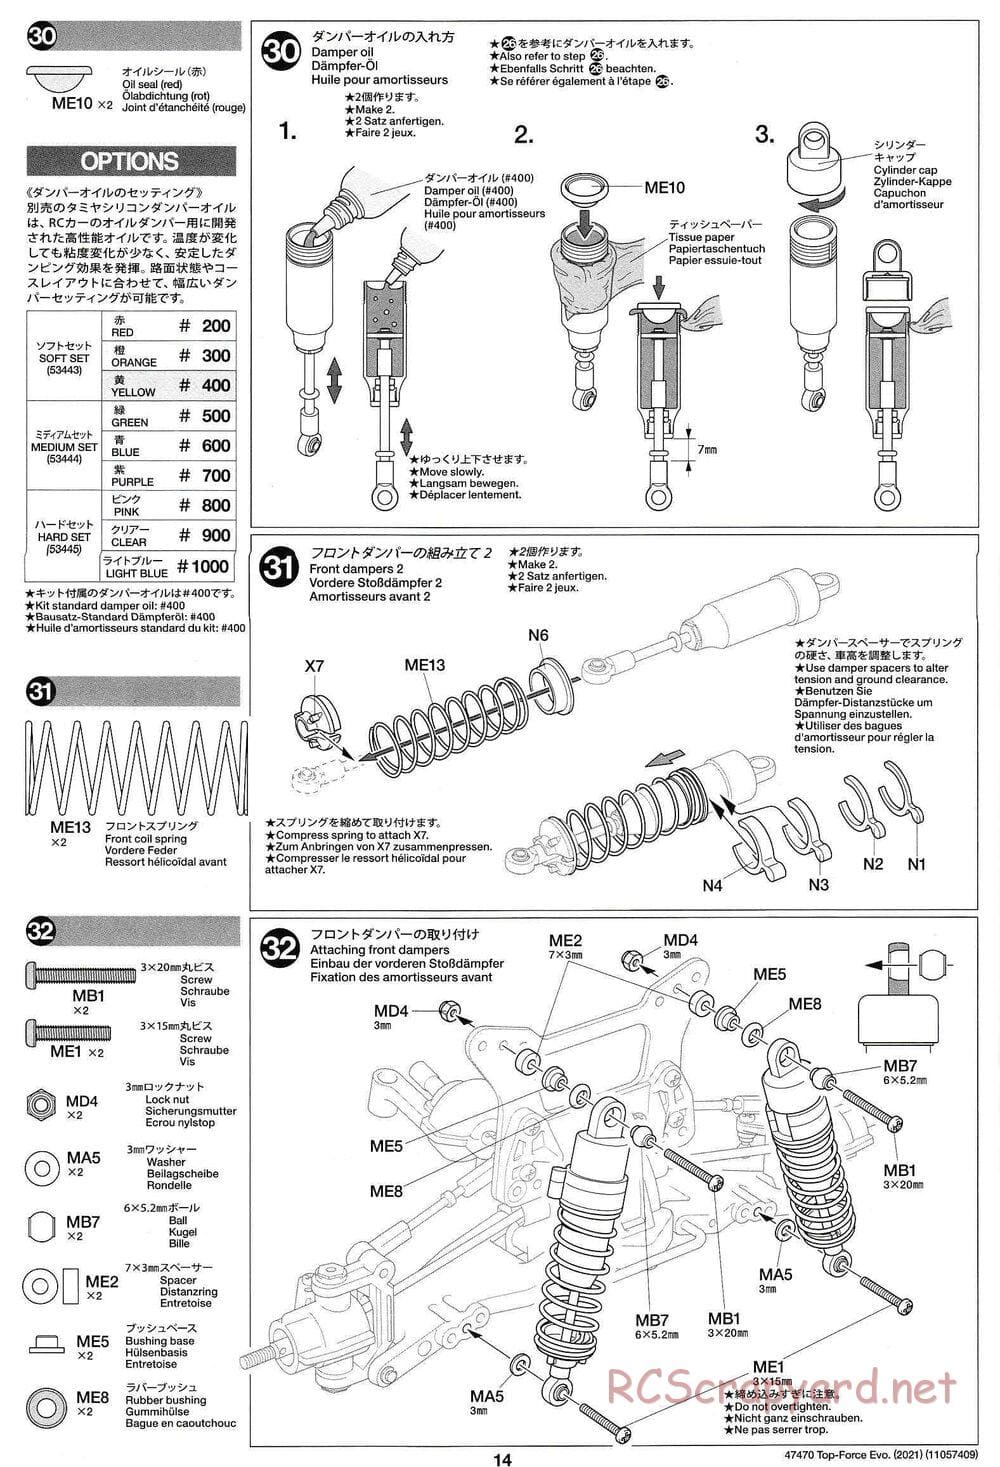 Tamiya - Top Force Evo 2021 - DF-01 Chassis - Manual - Page 14